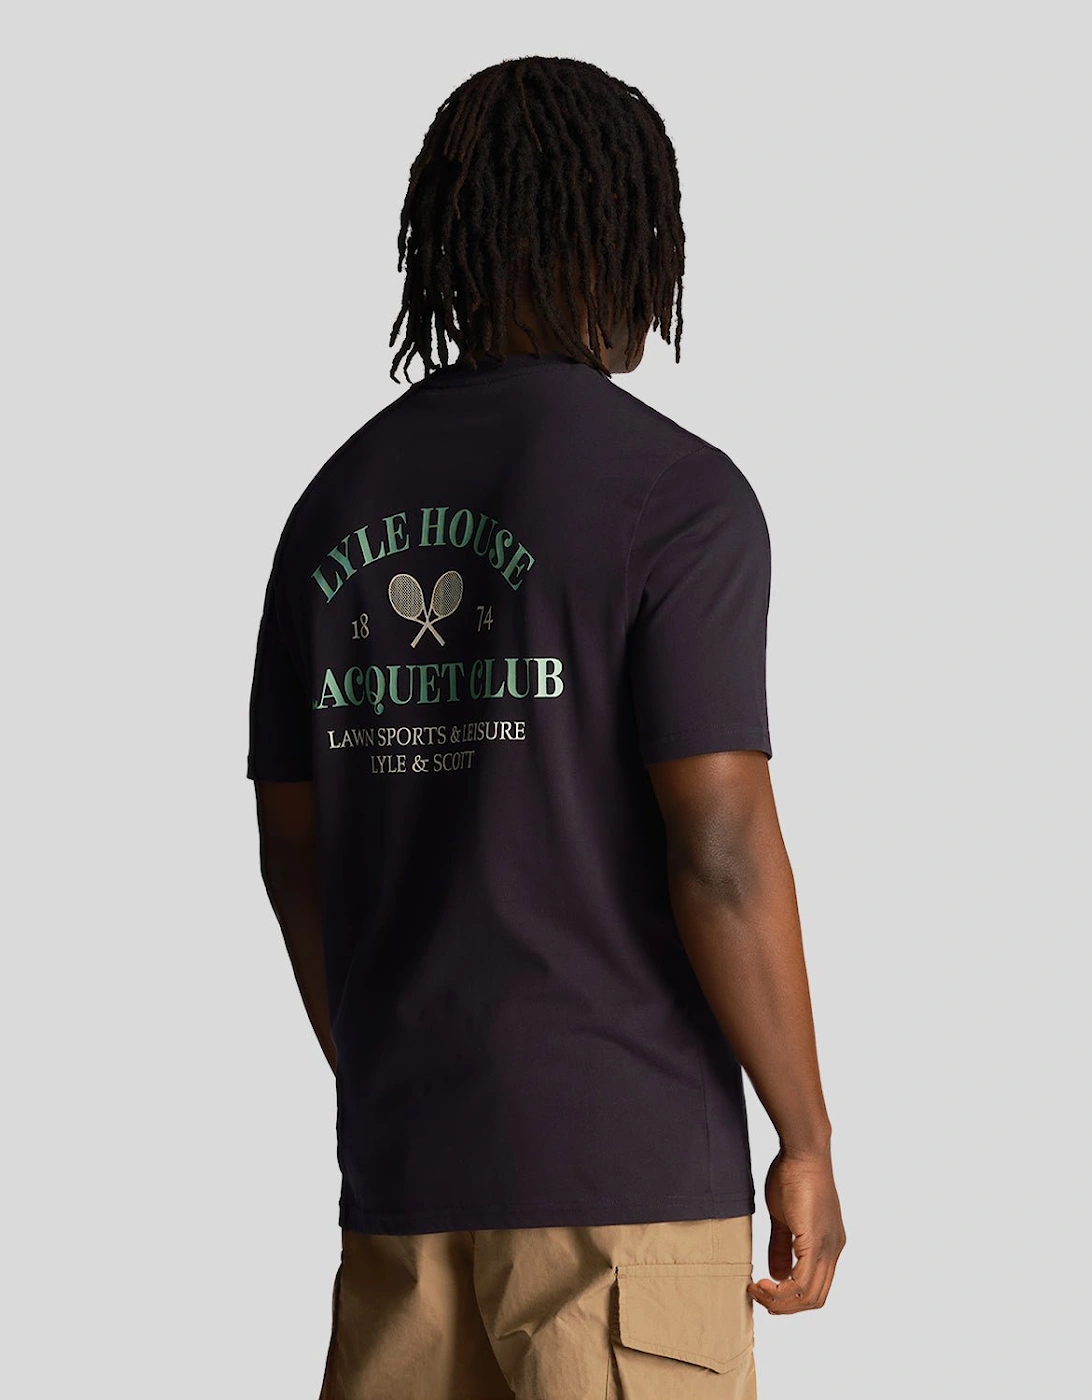 Racquet Club Graphic T-Shirt